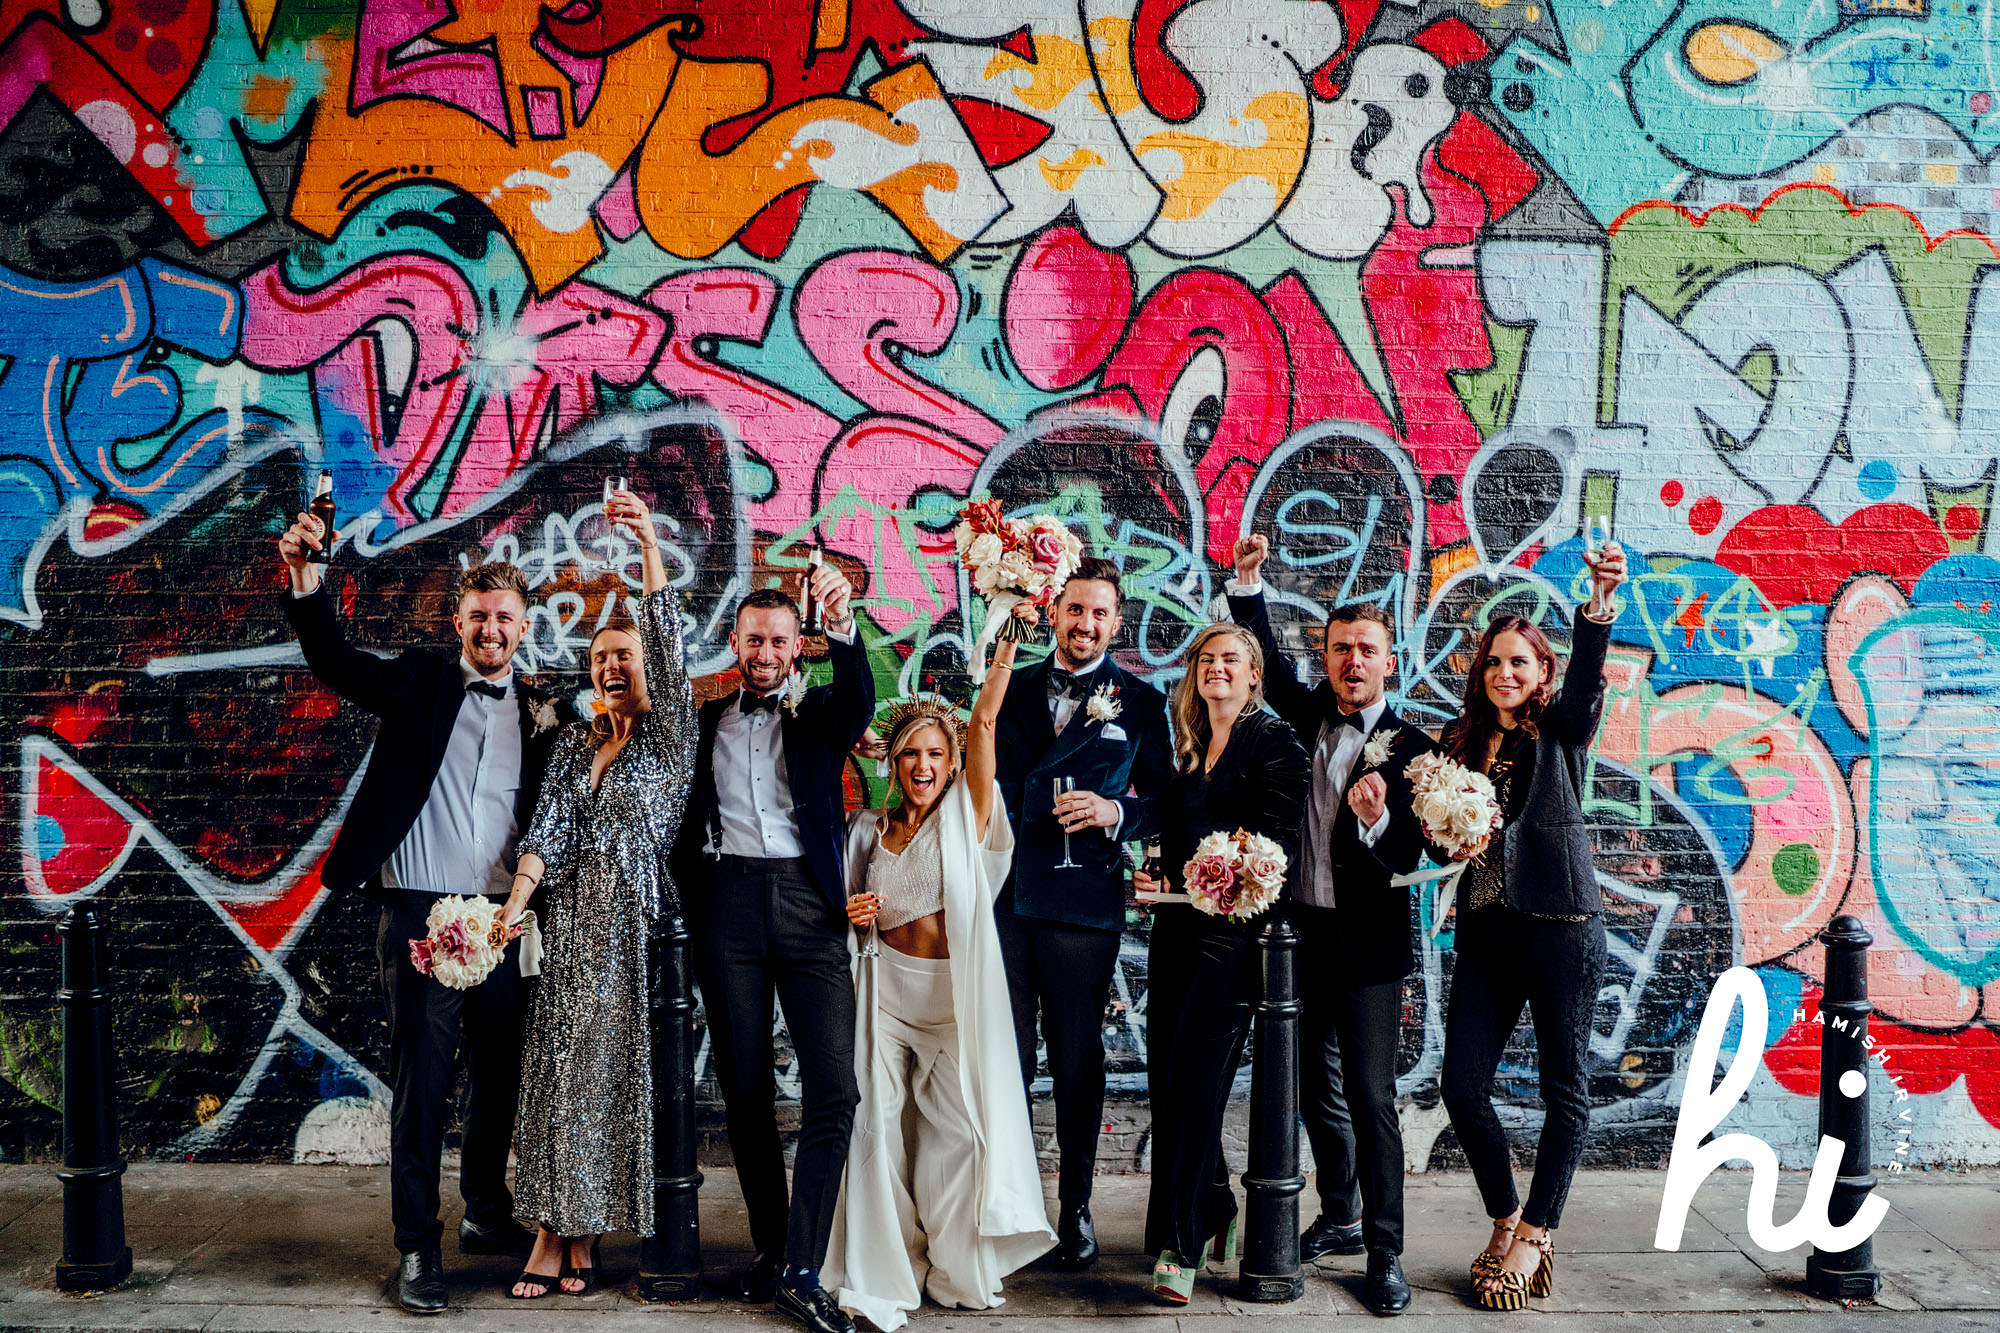 graffiti alternative wedding venue Shoreditch Studios Wedding Photographer Hamish Irvine